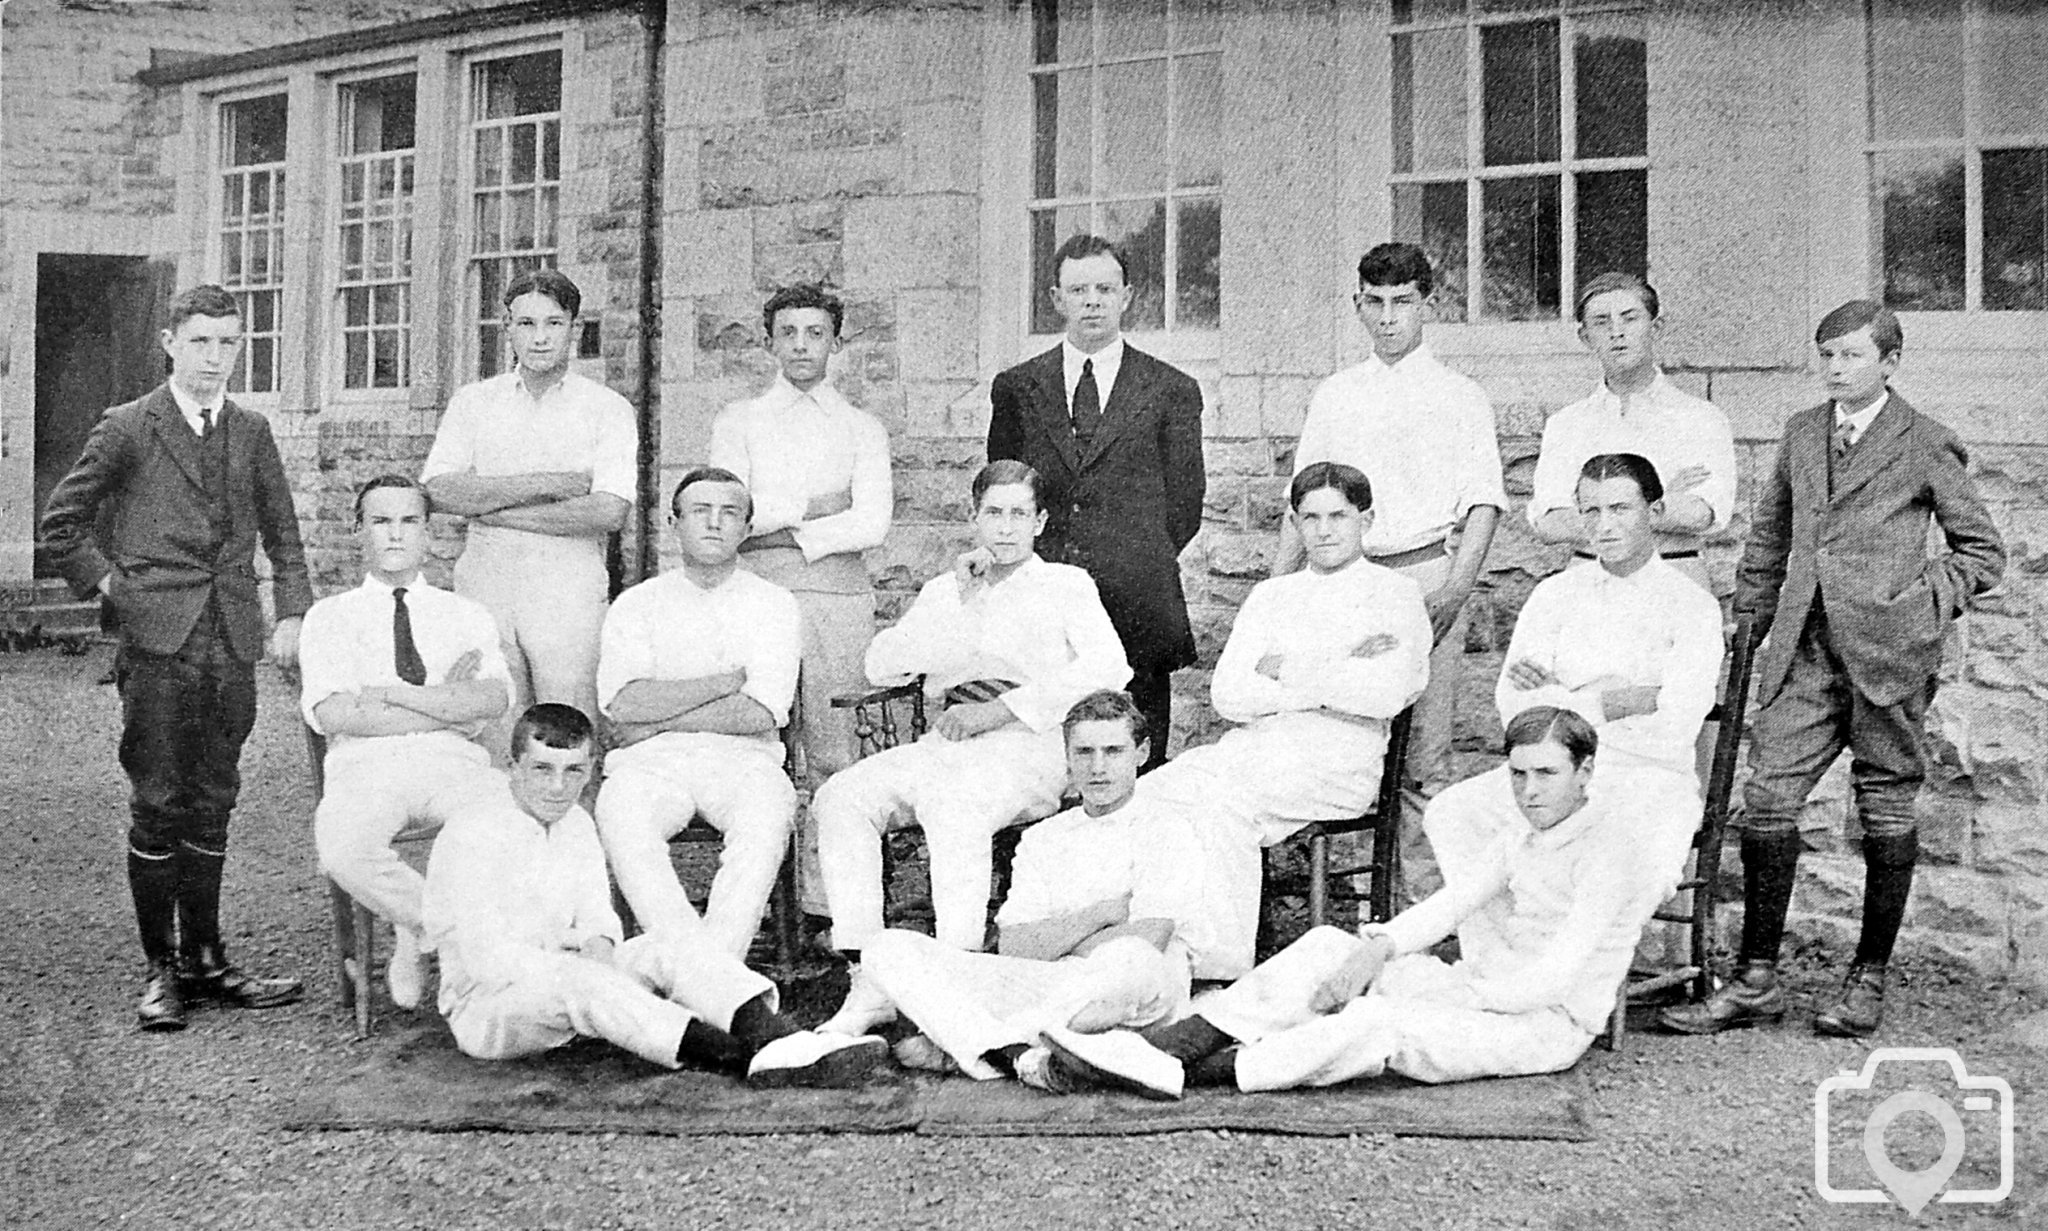 Cricket Team 1914